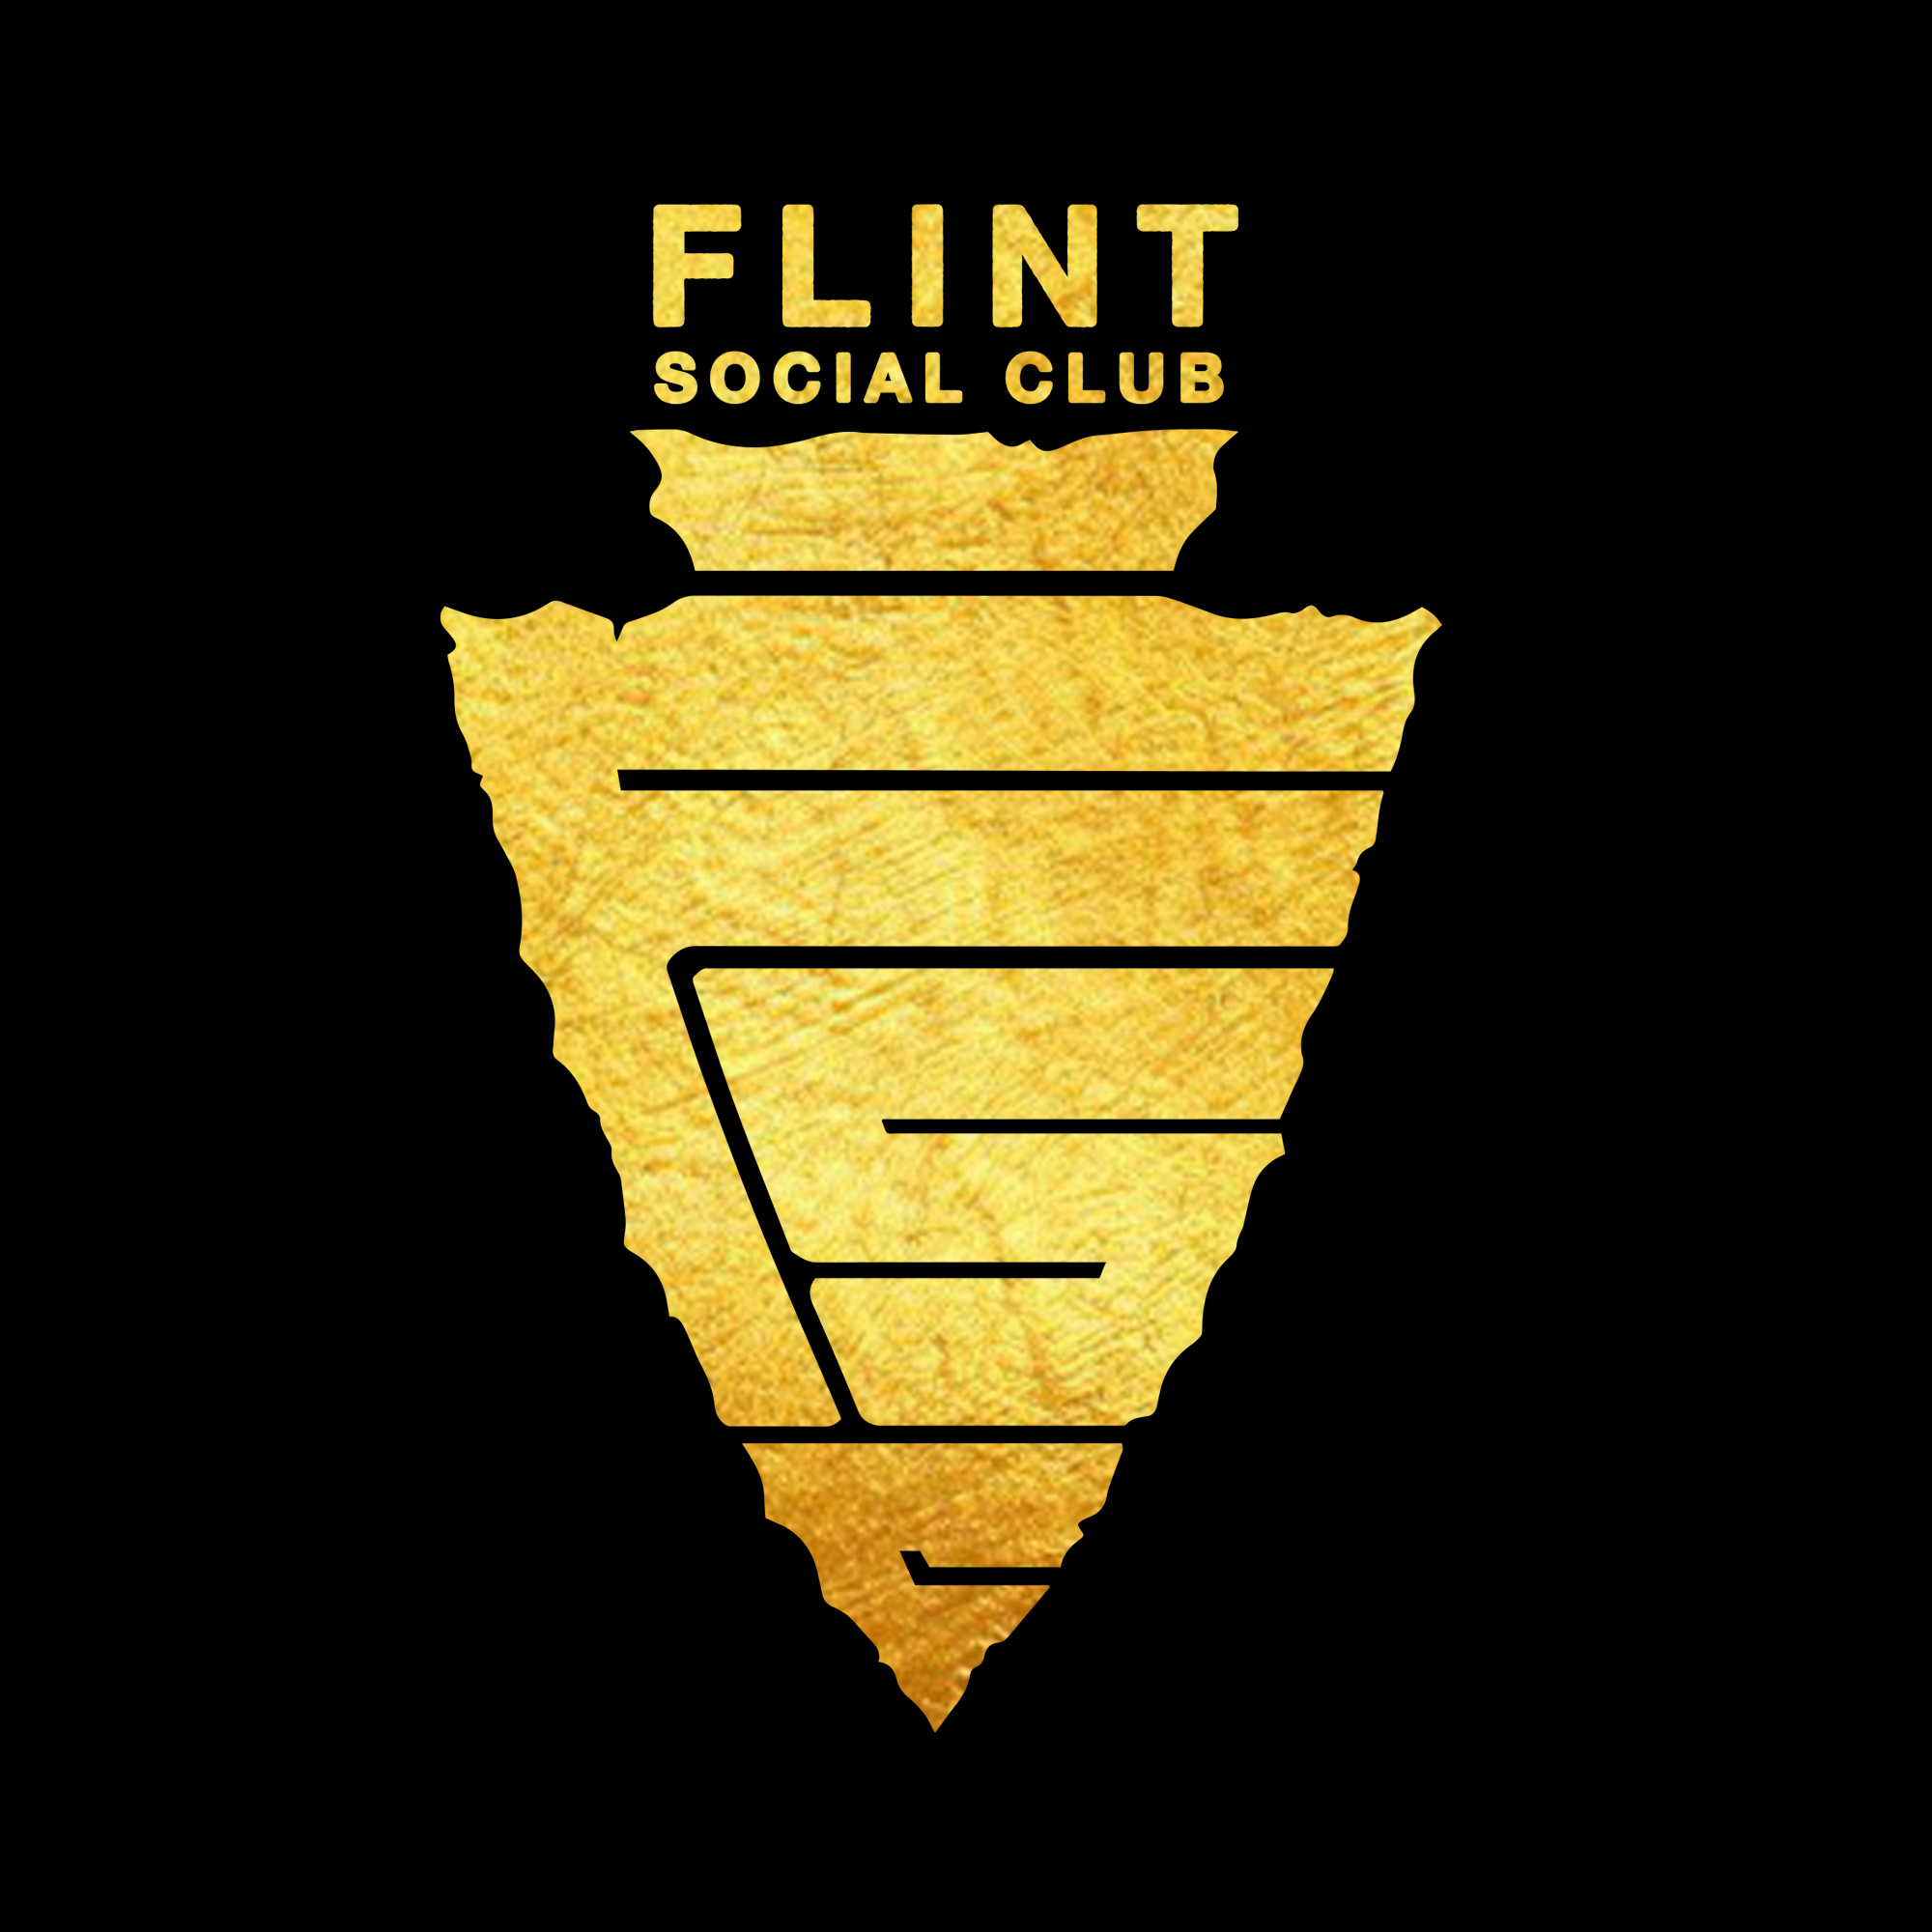 FlintSocialClub-Gold_leaf-SocialMedia_jaggedTXT1